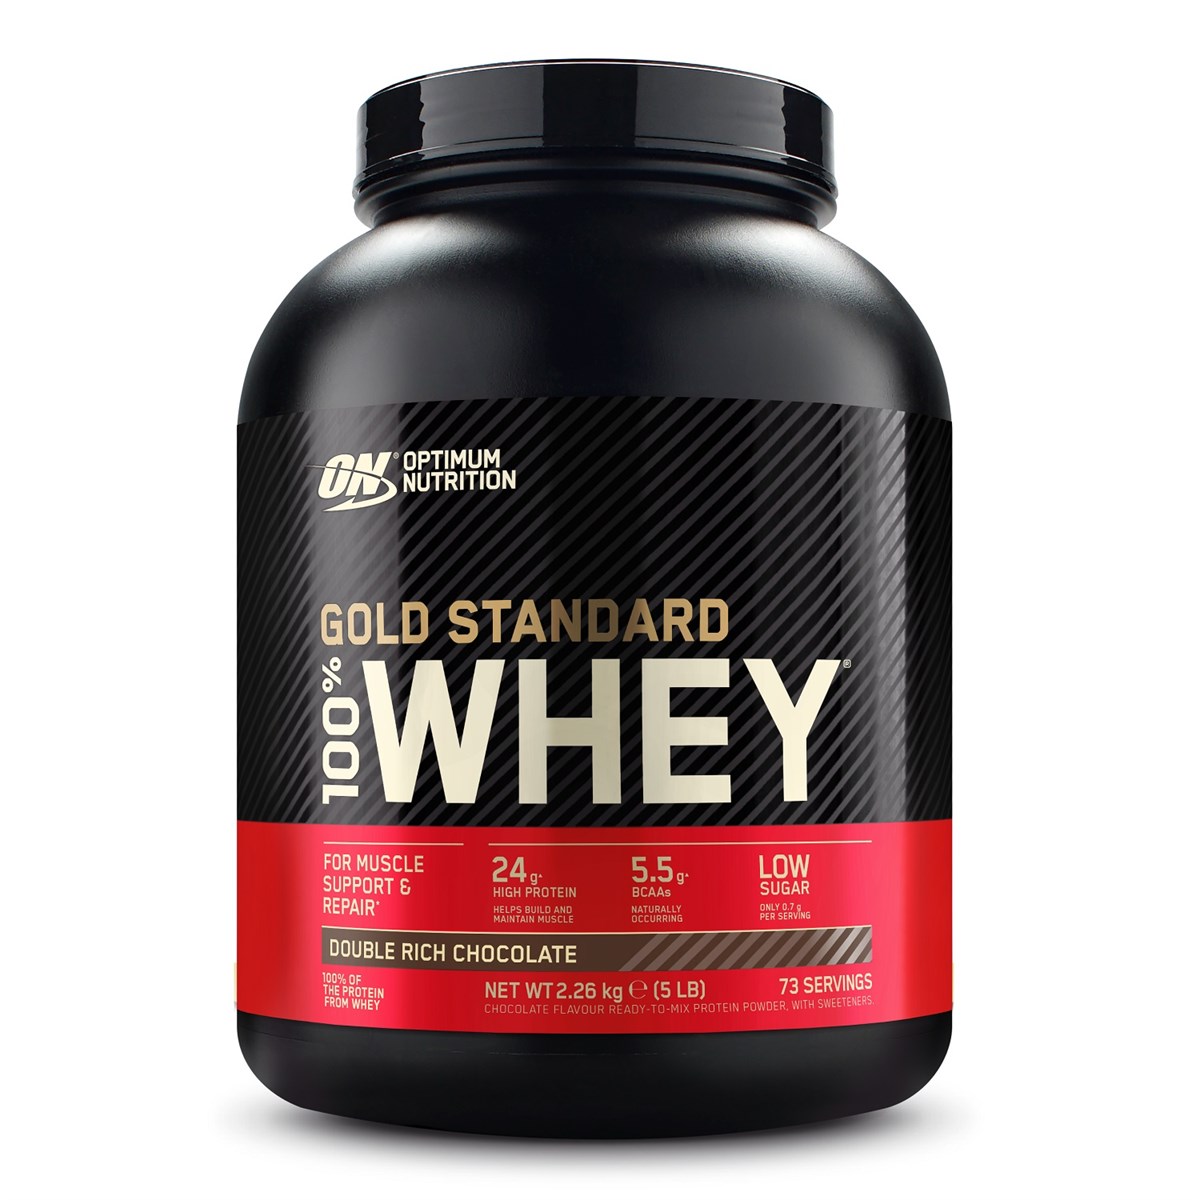 100% Whey Gold Standard - 2,27 kg